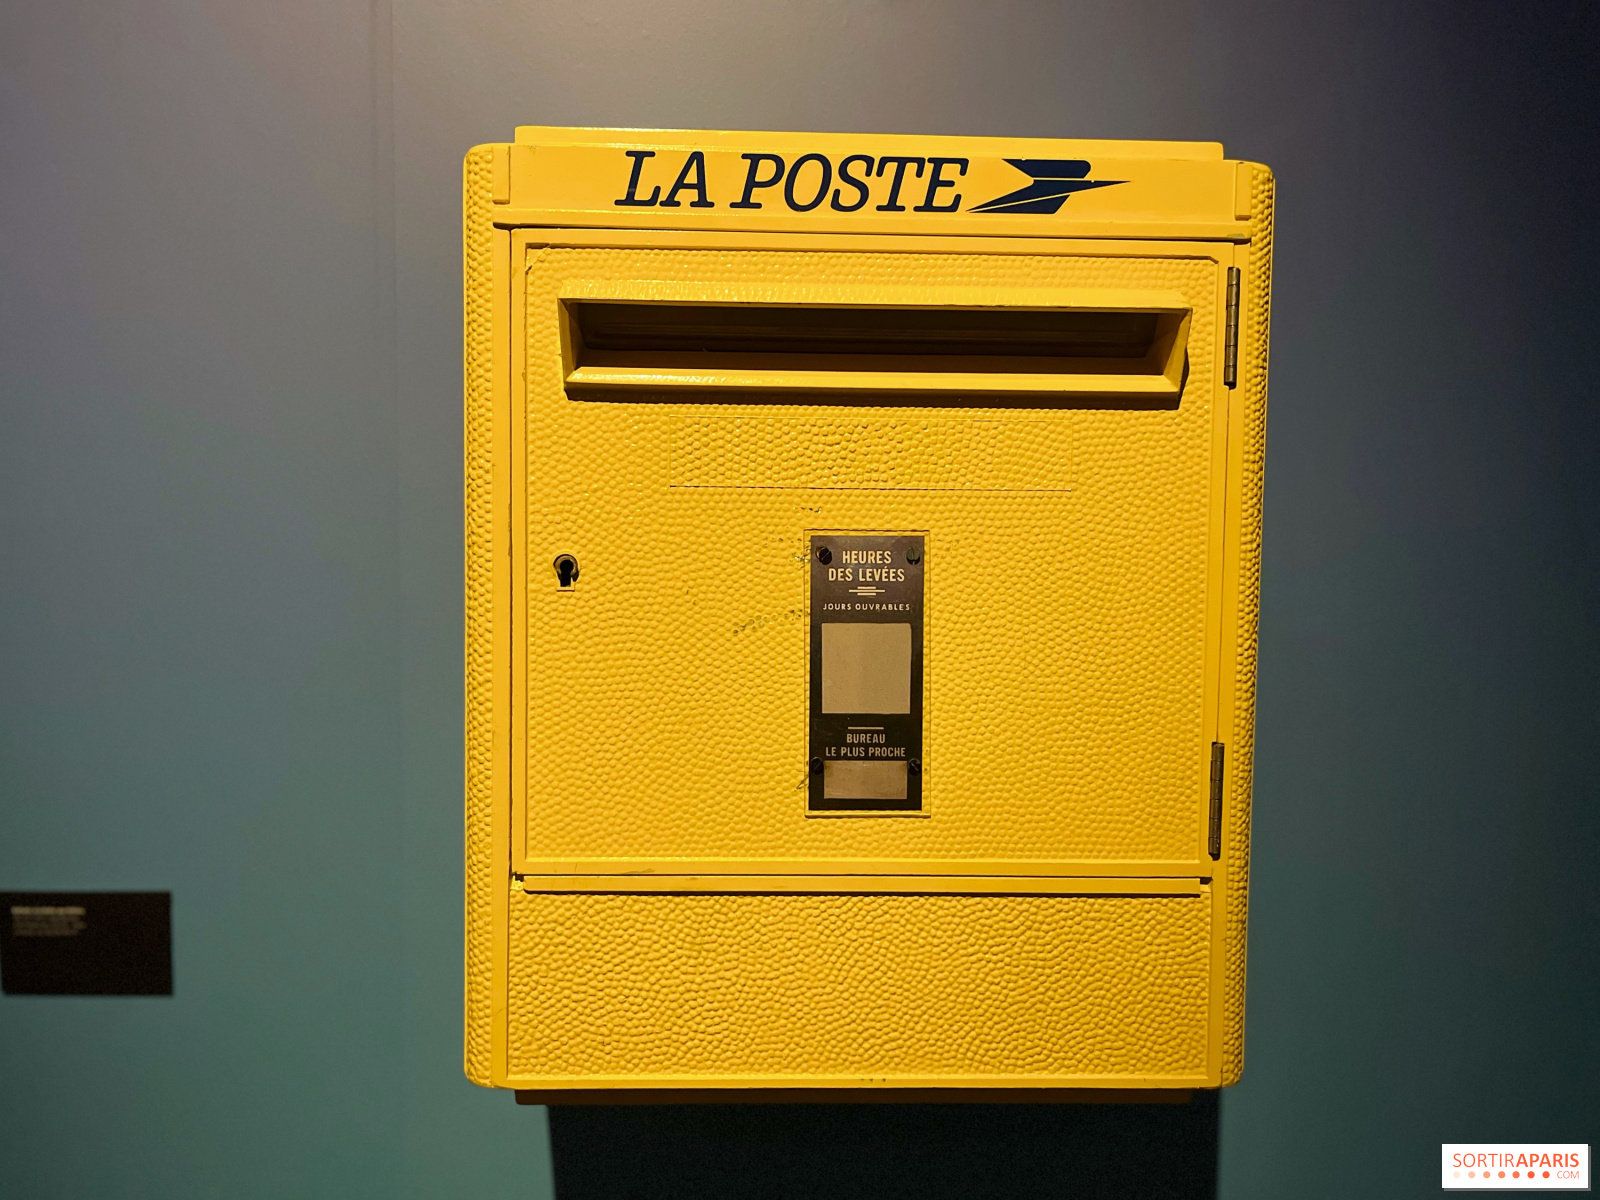 Parigi: 200 cassette postali chiuse per prevenire i furti di posta. 